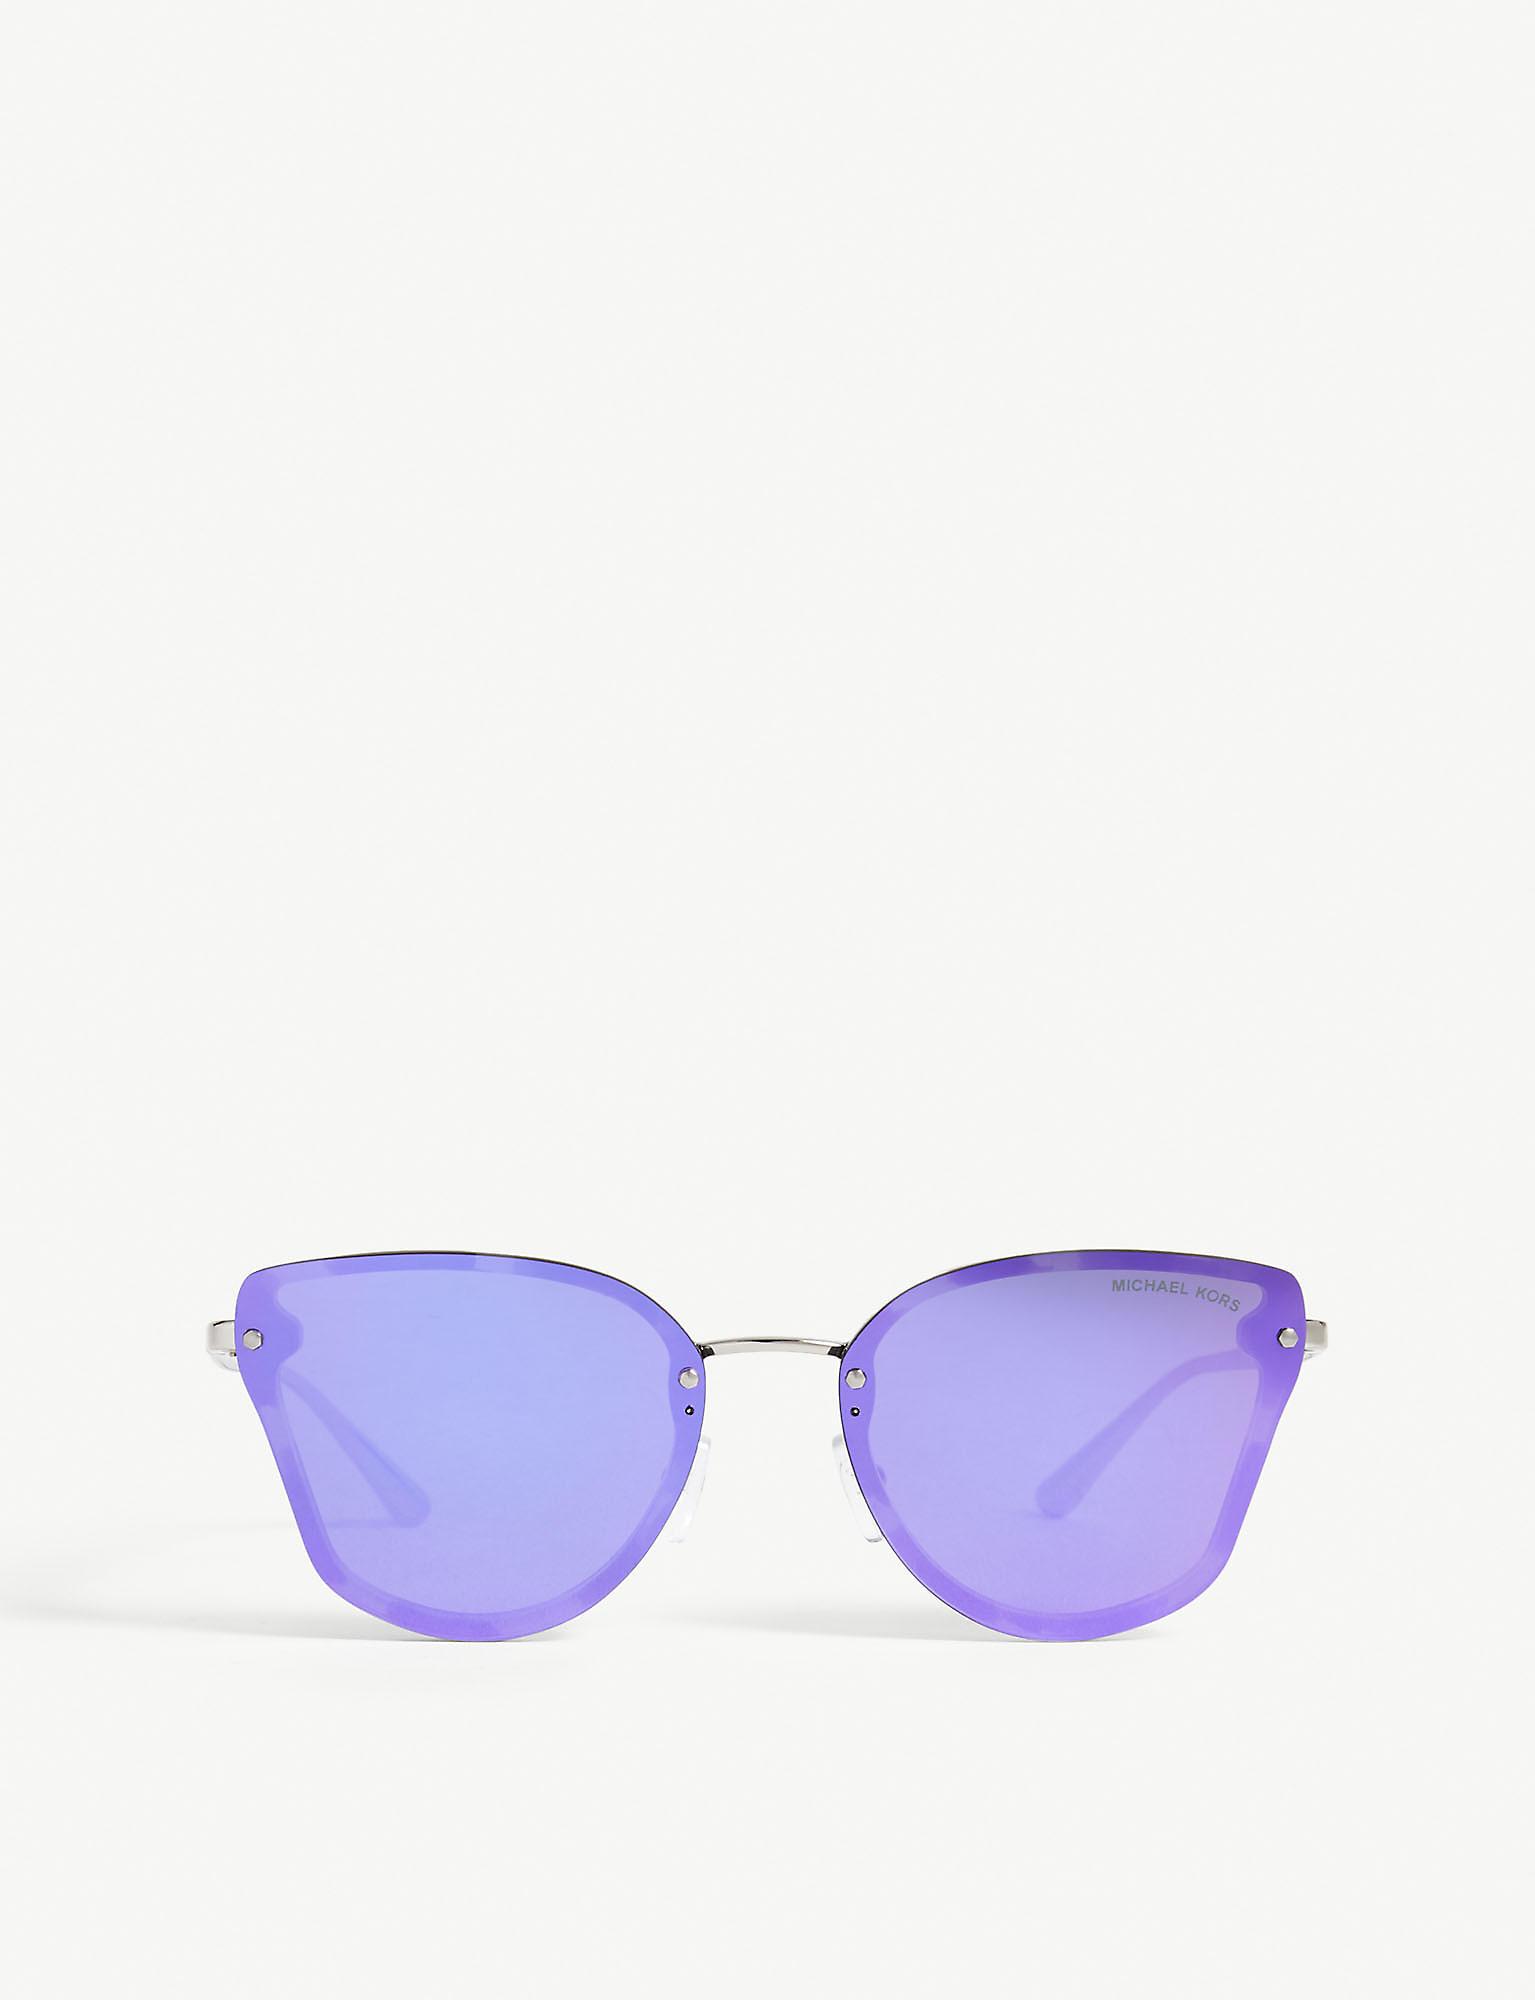 Michael Kors Sanibel Butterfly-frame Sunglasses in Purple - Lyst